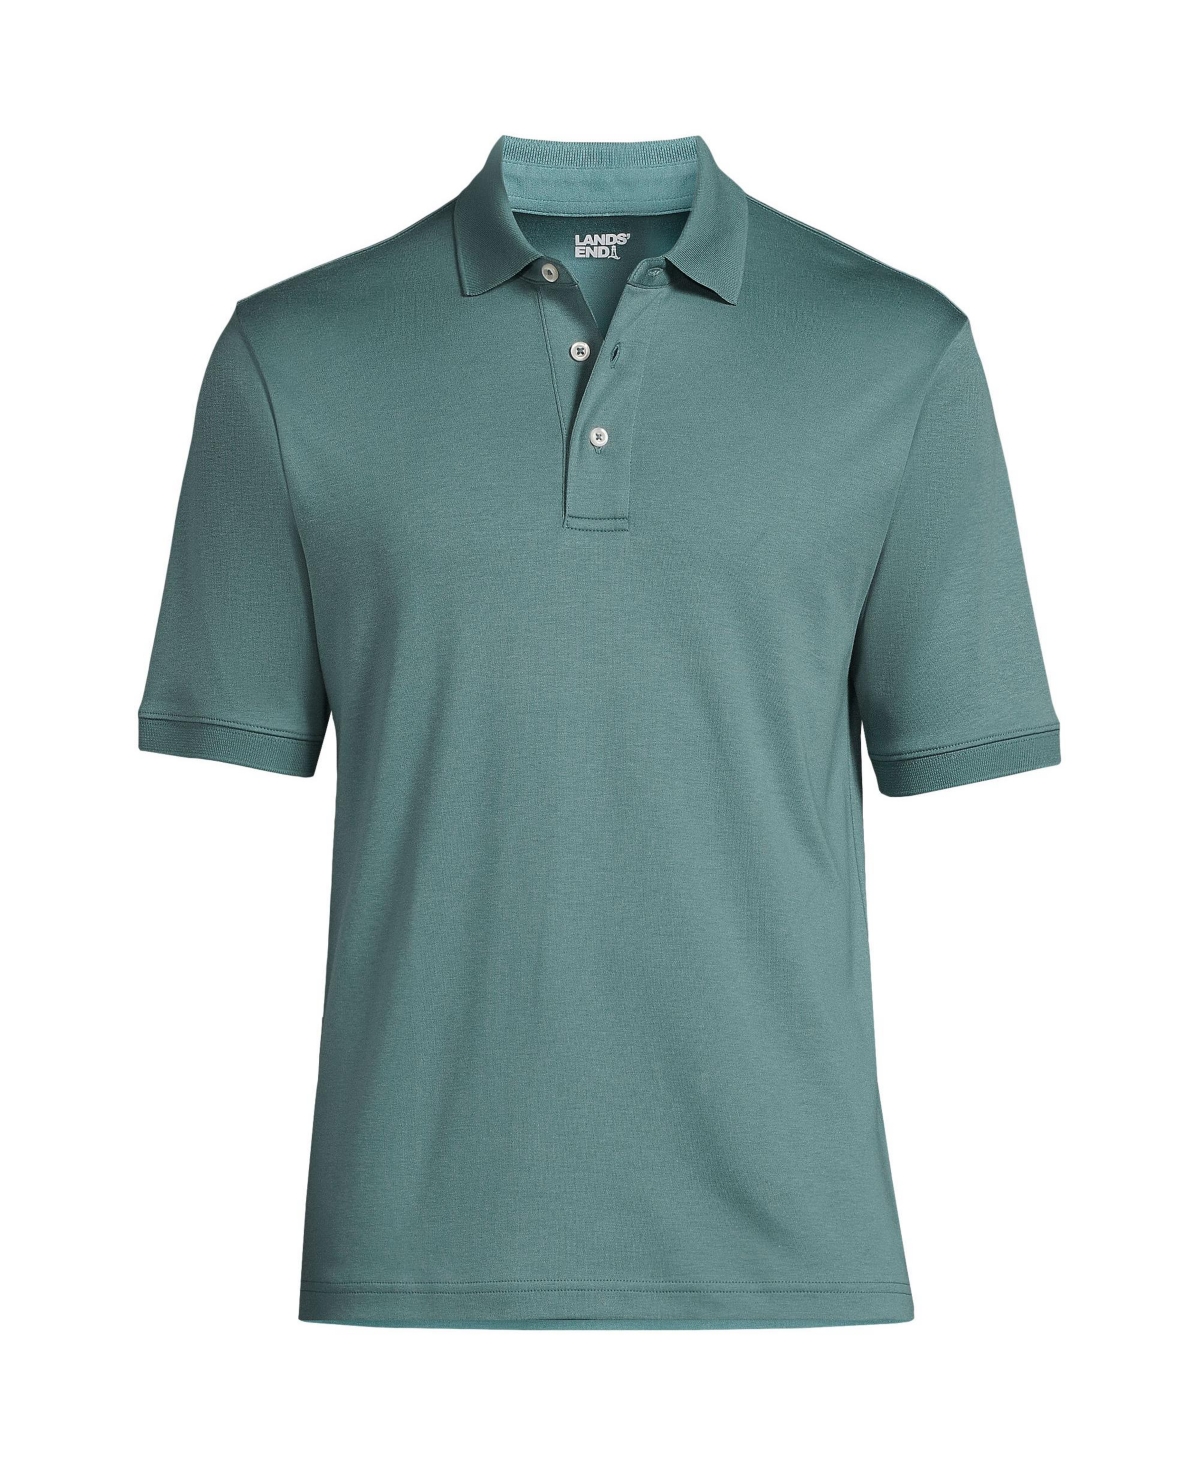 Men's Short Sleeve Cotton Supima Polo Shirt - Tourmaline